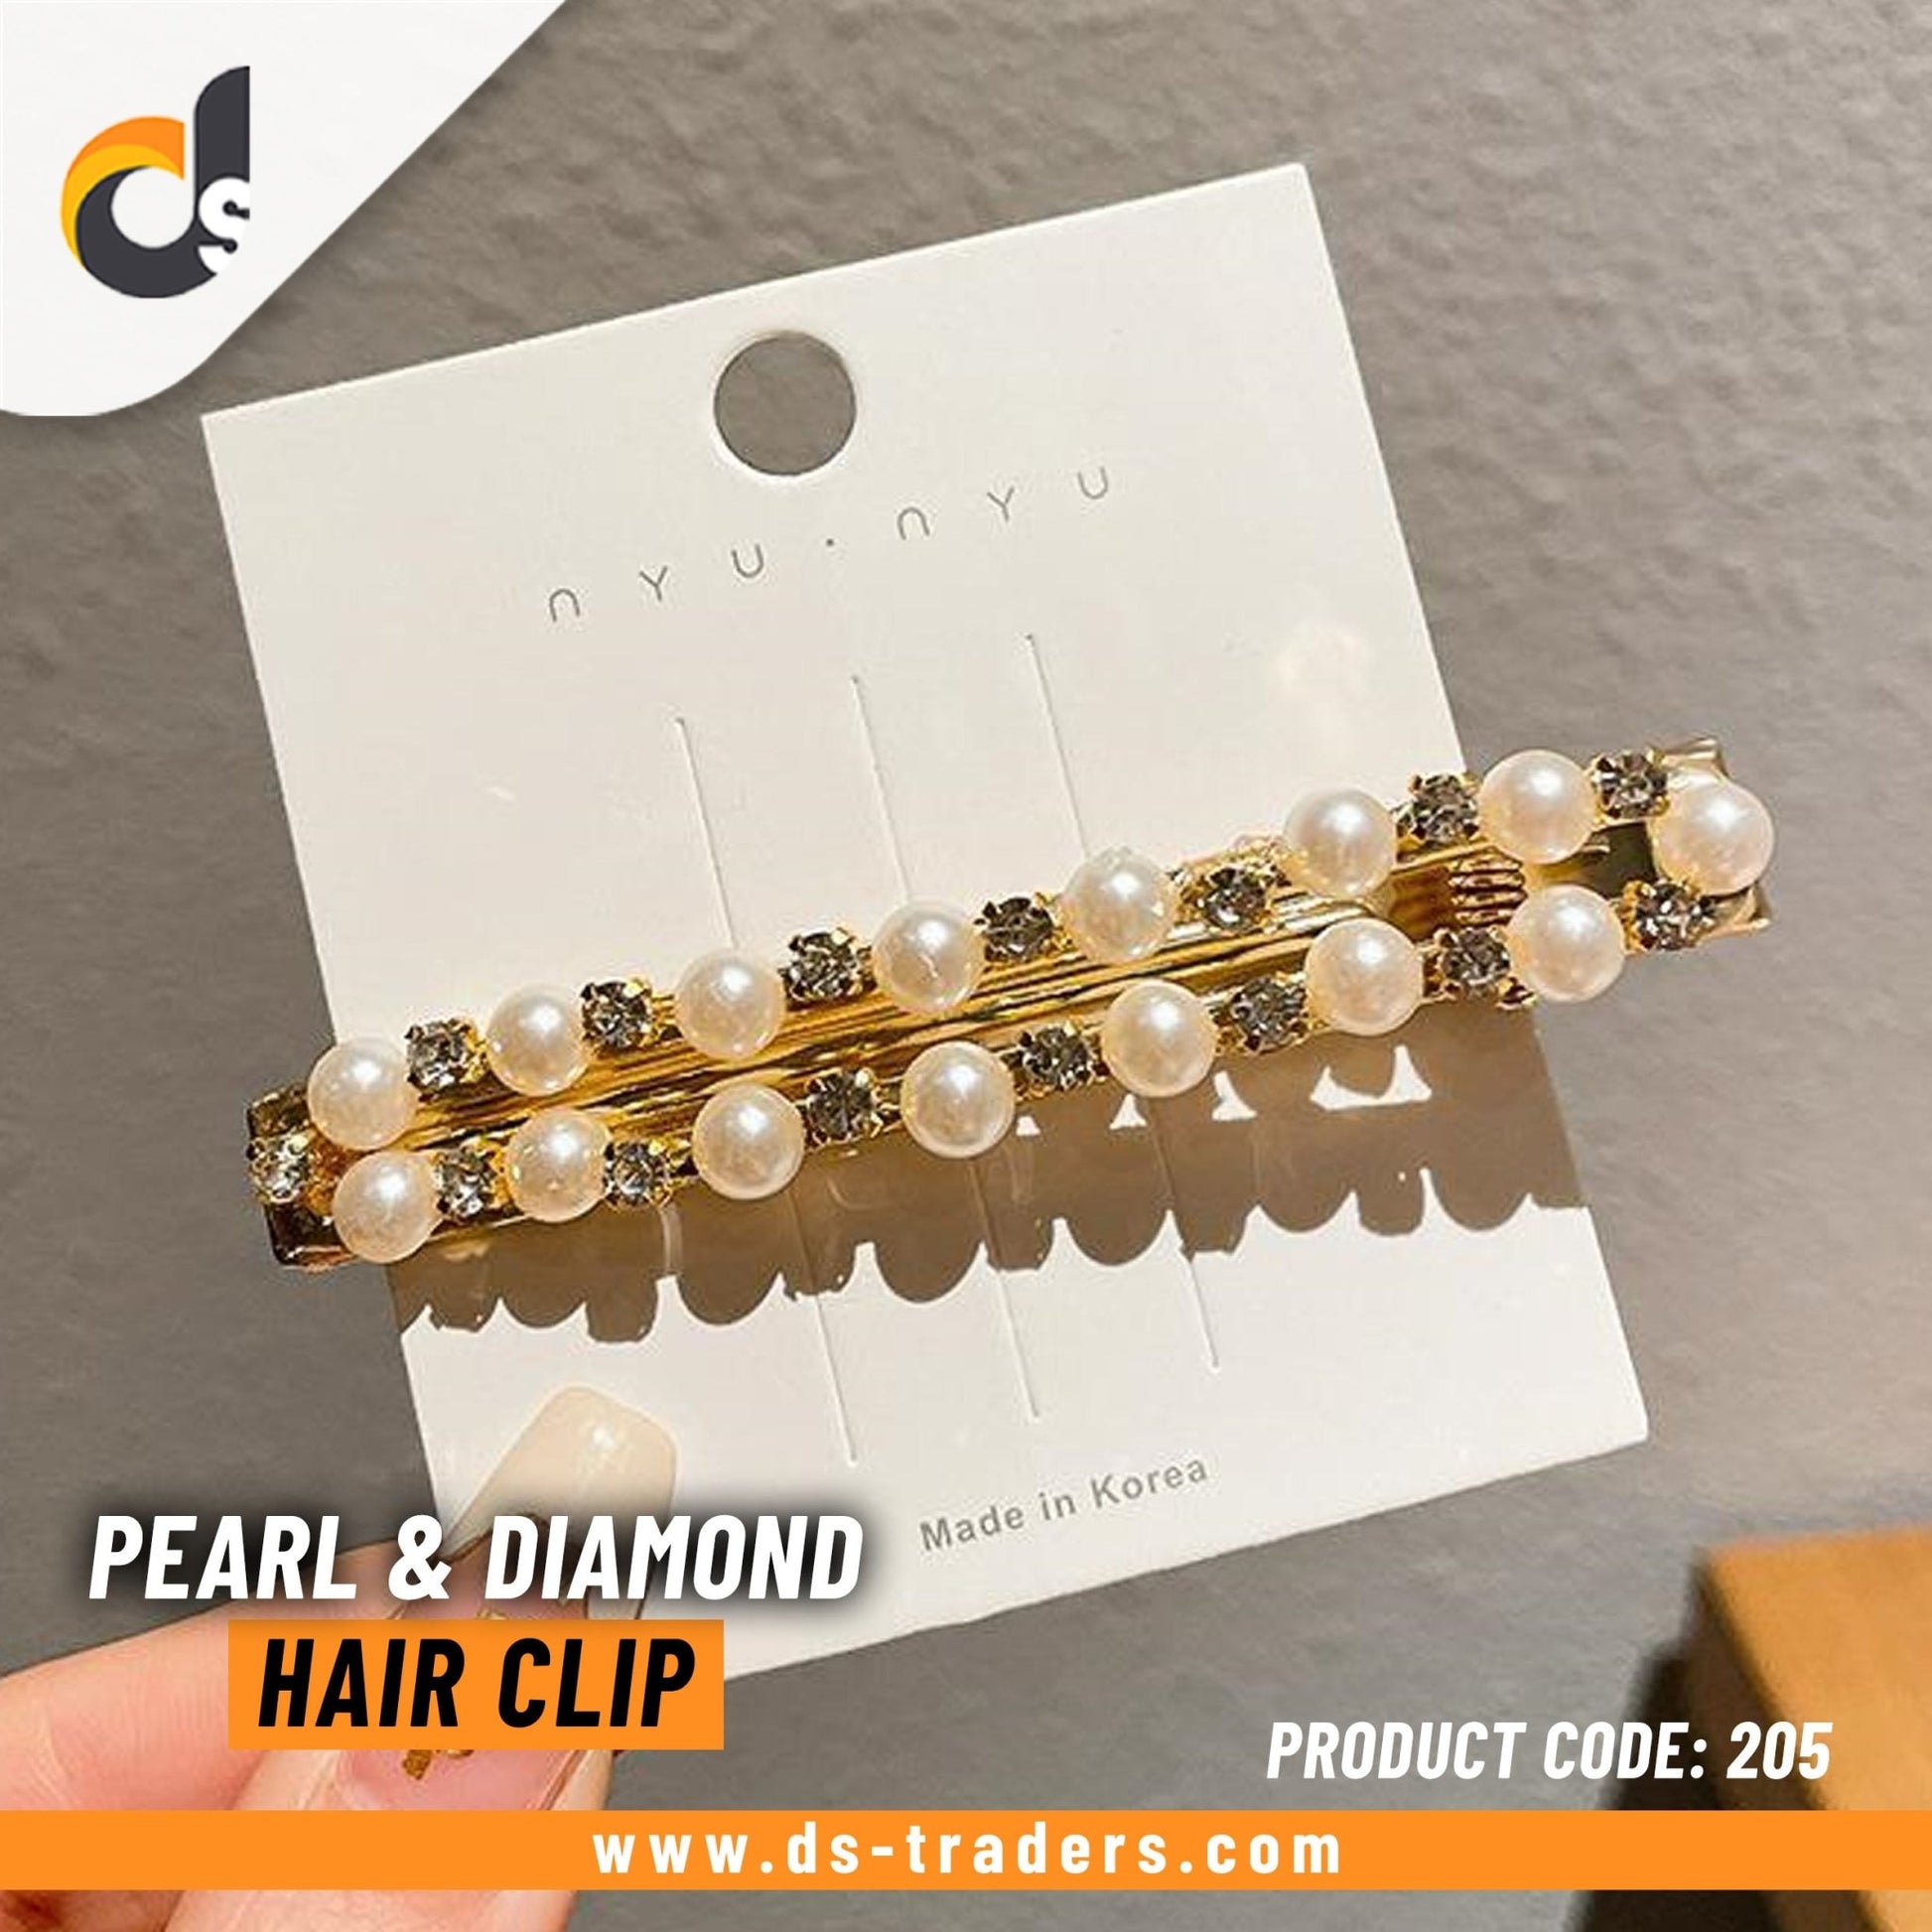 Pearl & Diamond Shiny Hair Clip - DS Traders